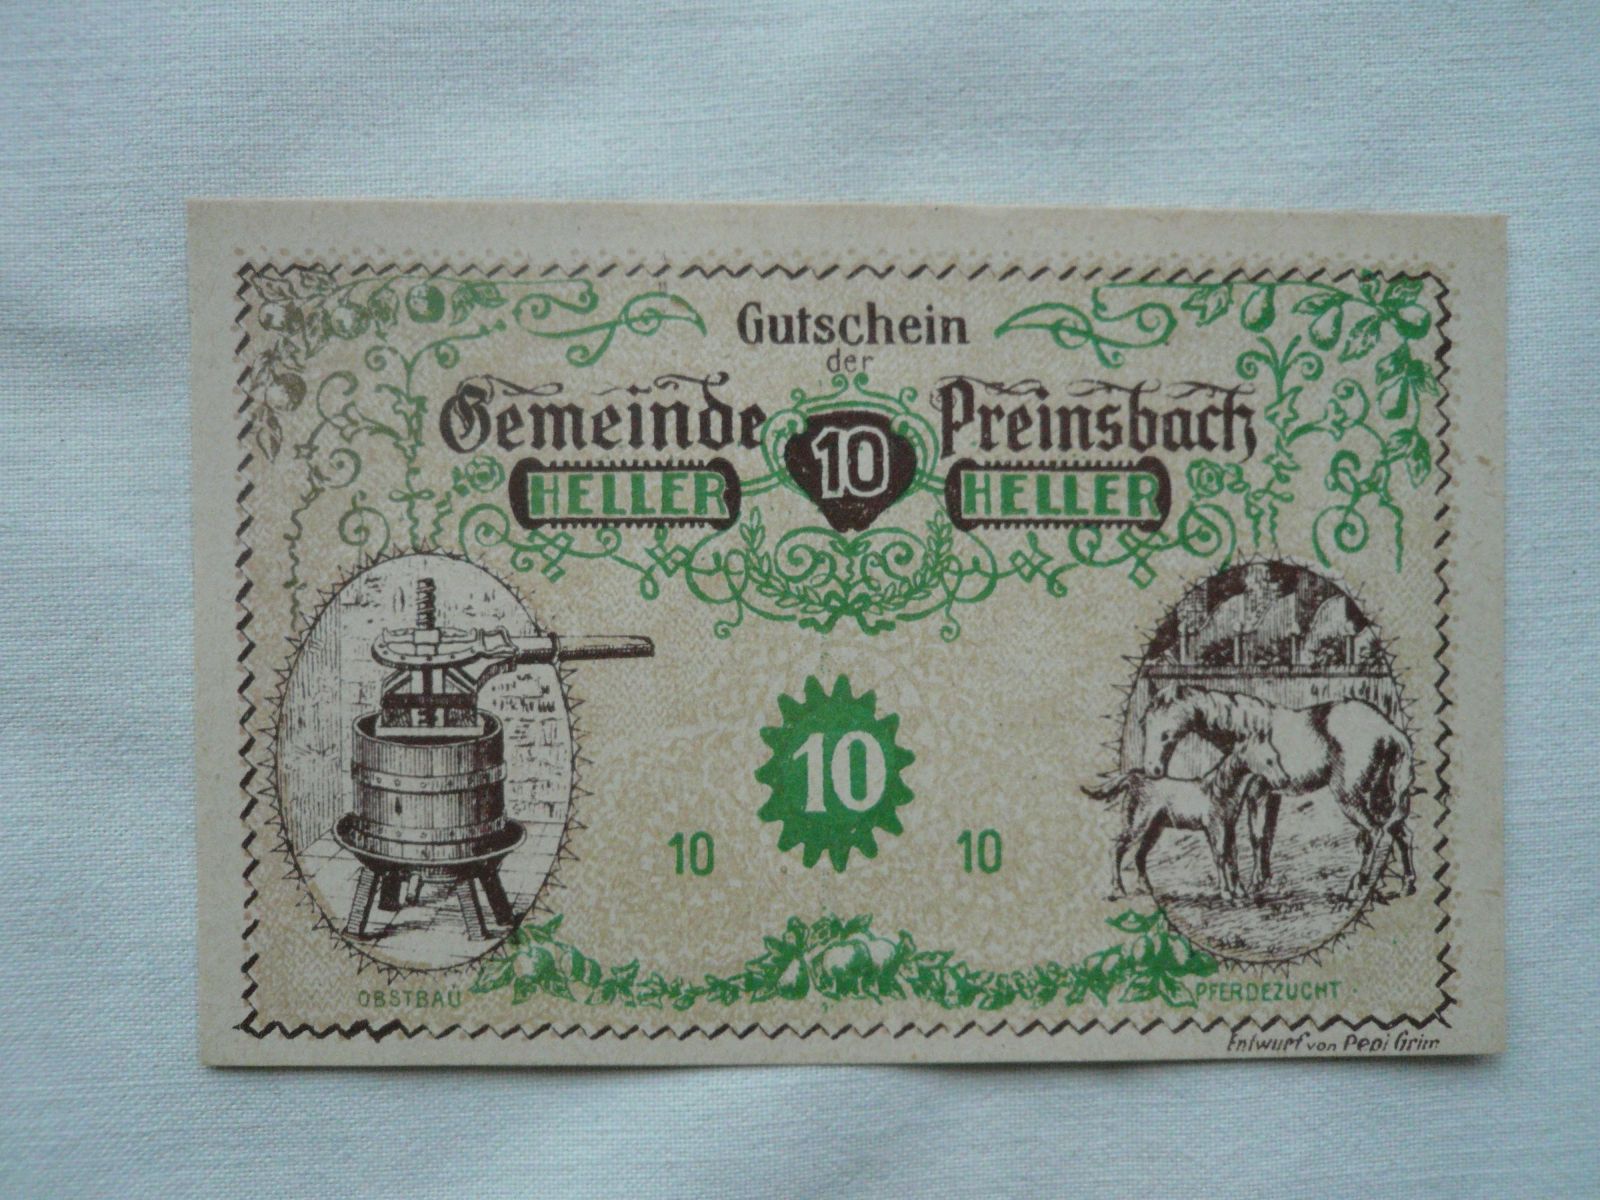 10 Heller, Preinsbach, 1920 Rakousko